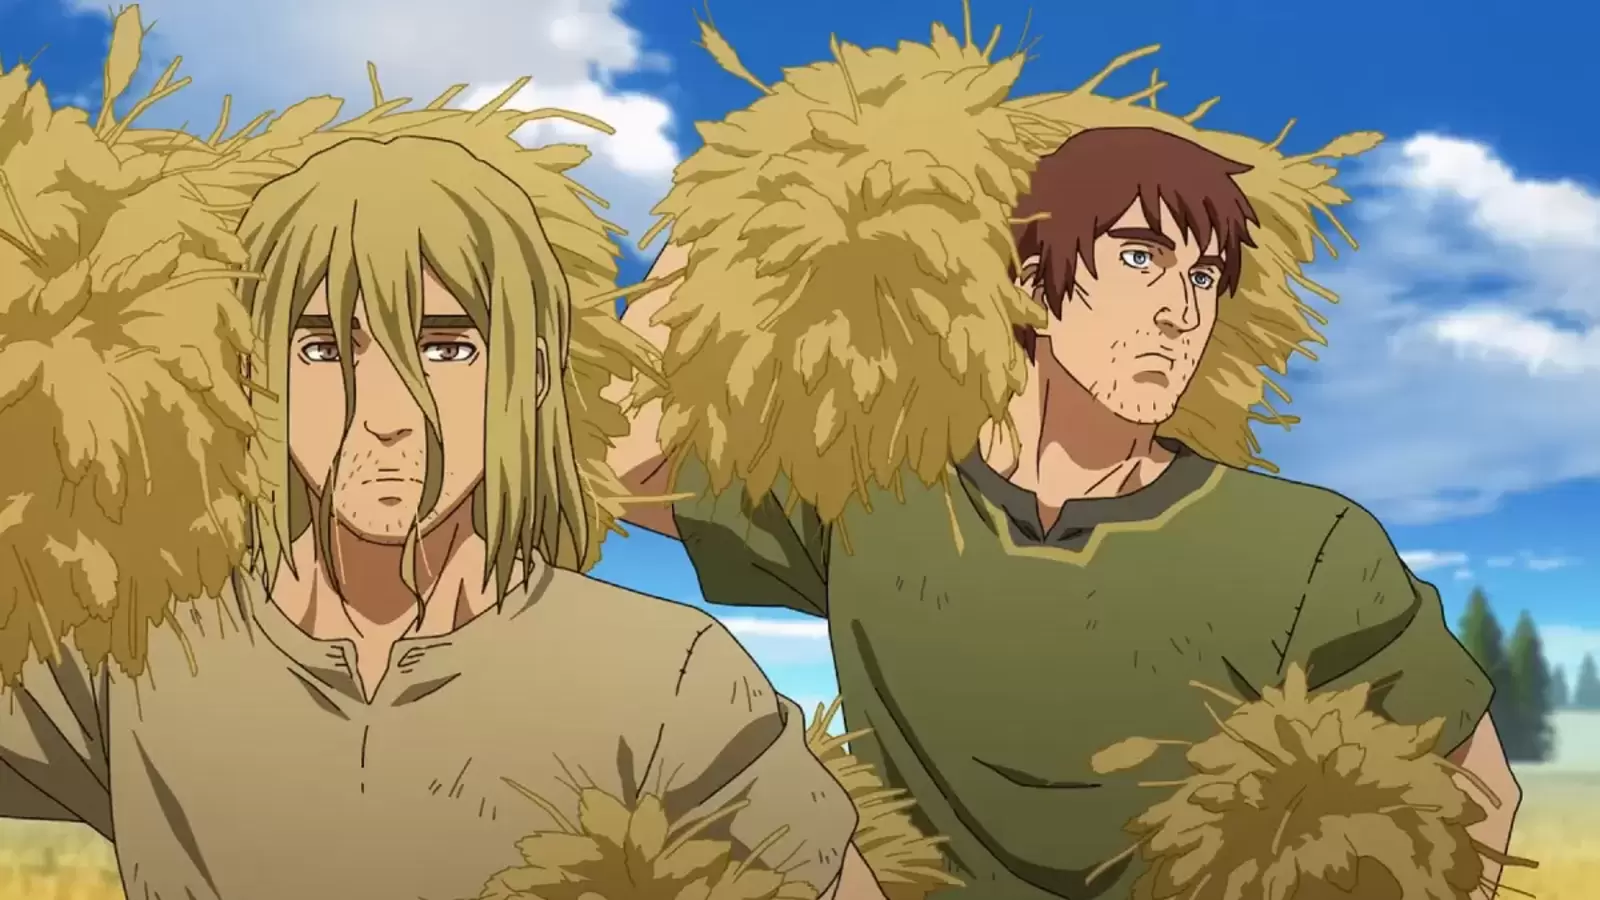 Trending Now: Anime Picks for the Wait on 'Vinland Saga' Season 3 - From Samurai Beats to Cyberpunk Streets